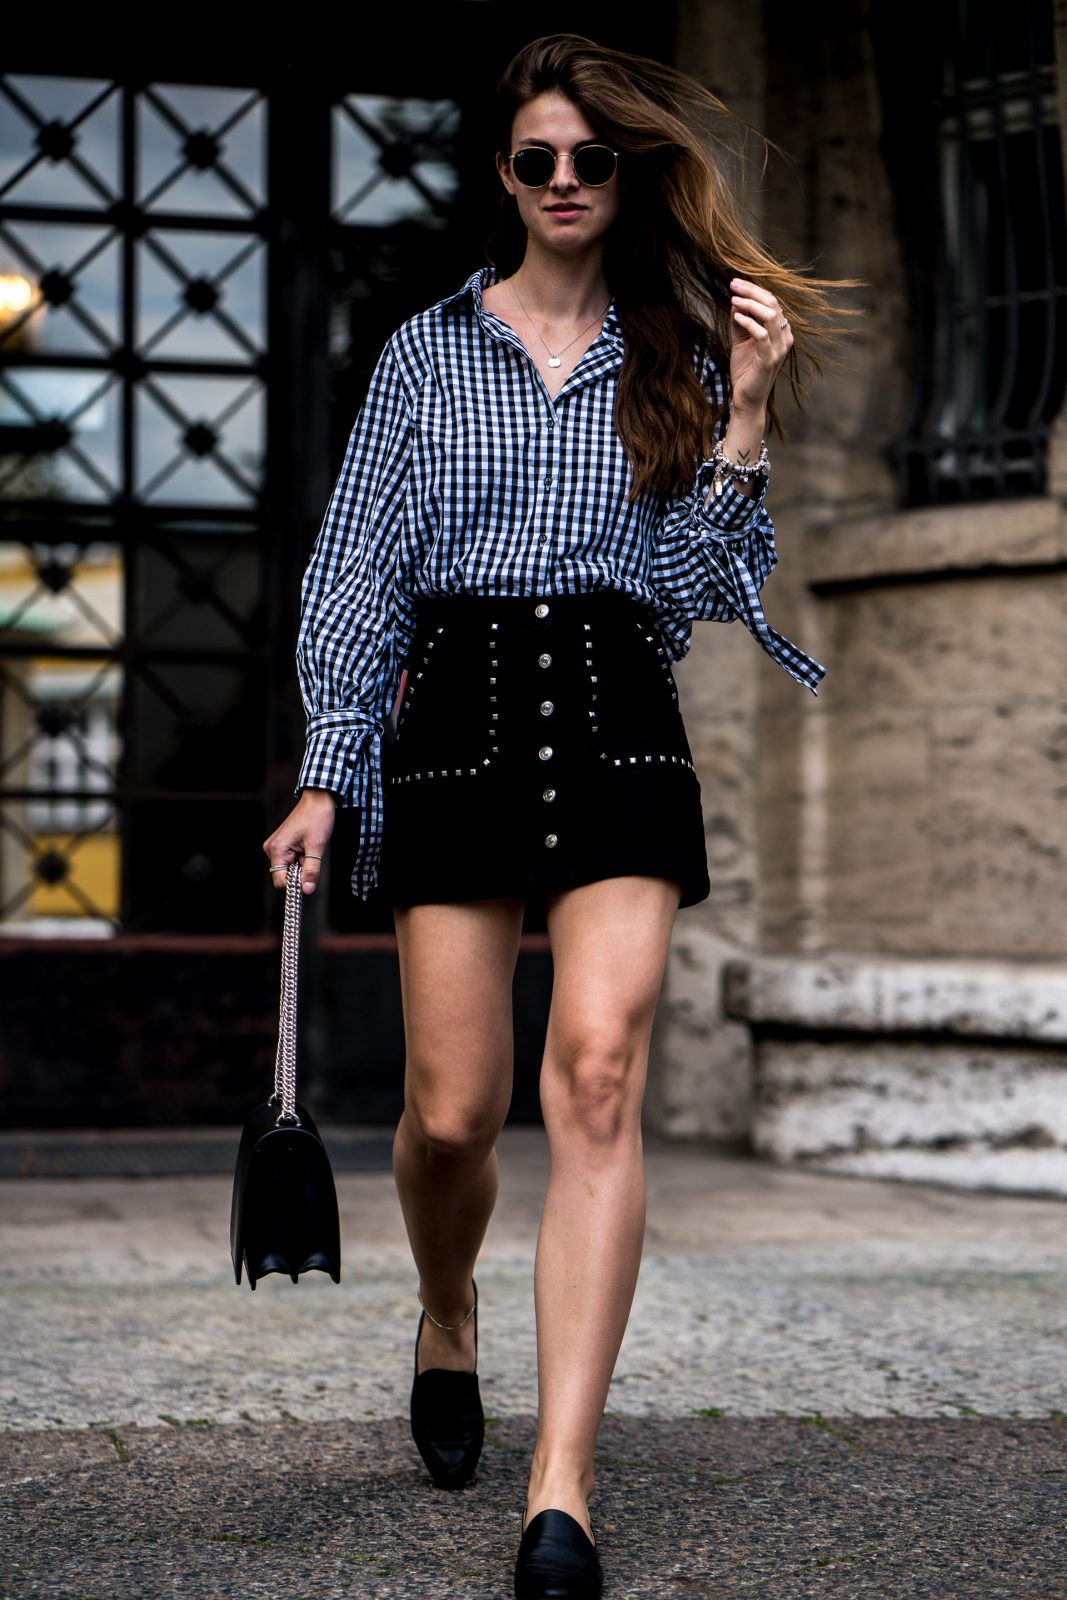 Gingham Shirt and Black Denim Skirt || How to wear gingham